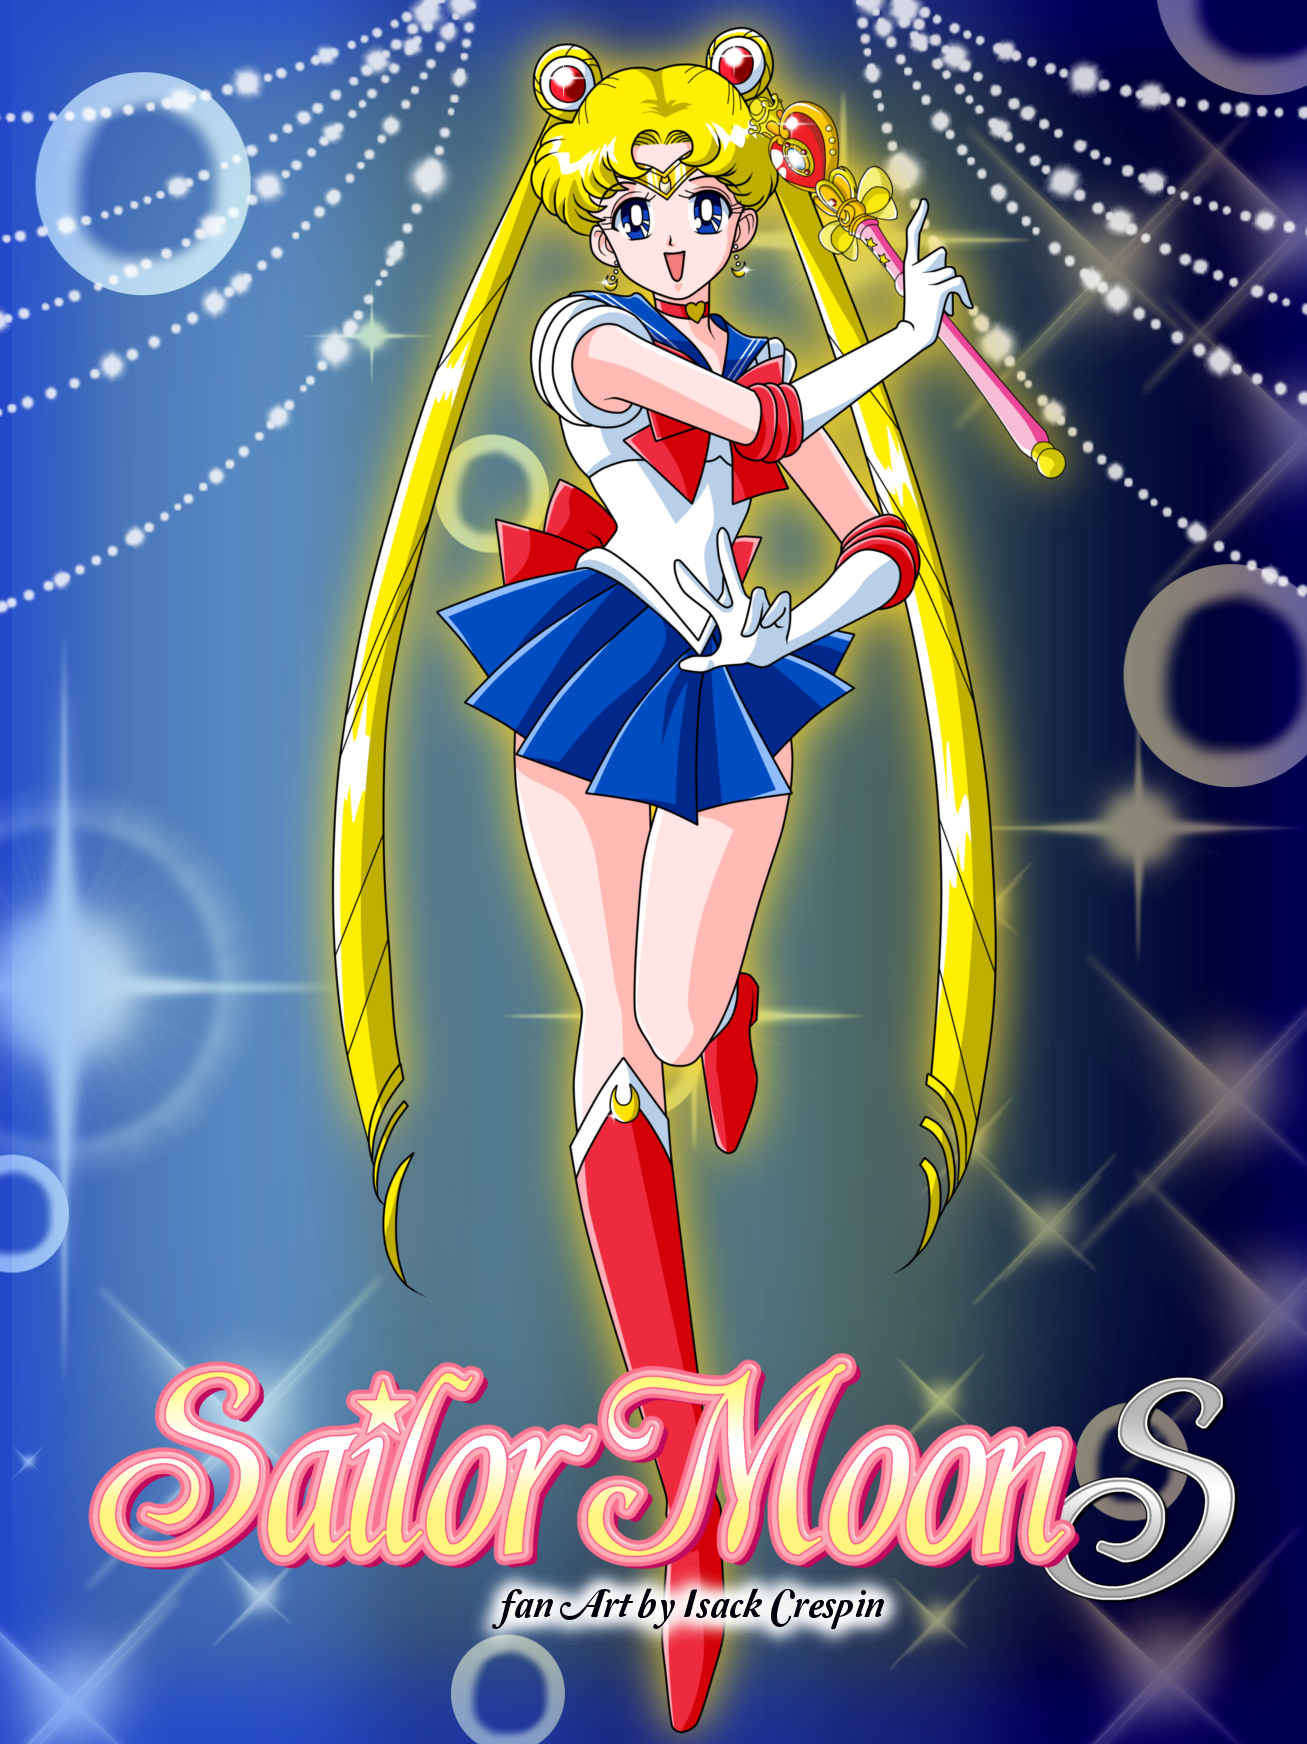 sailor moon s vem aí #sailormoon #sailor #sailormoons #sailormooncrys